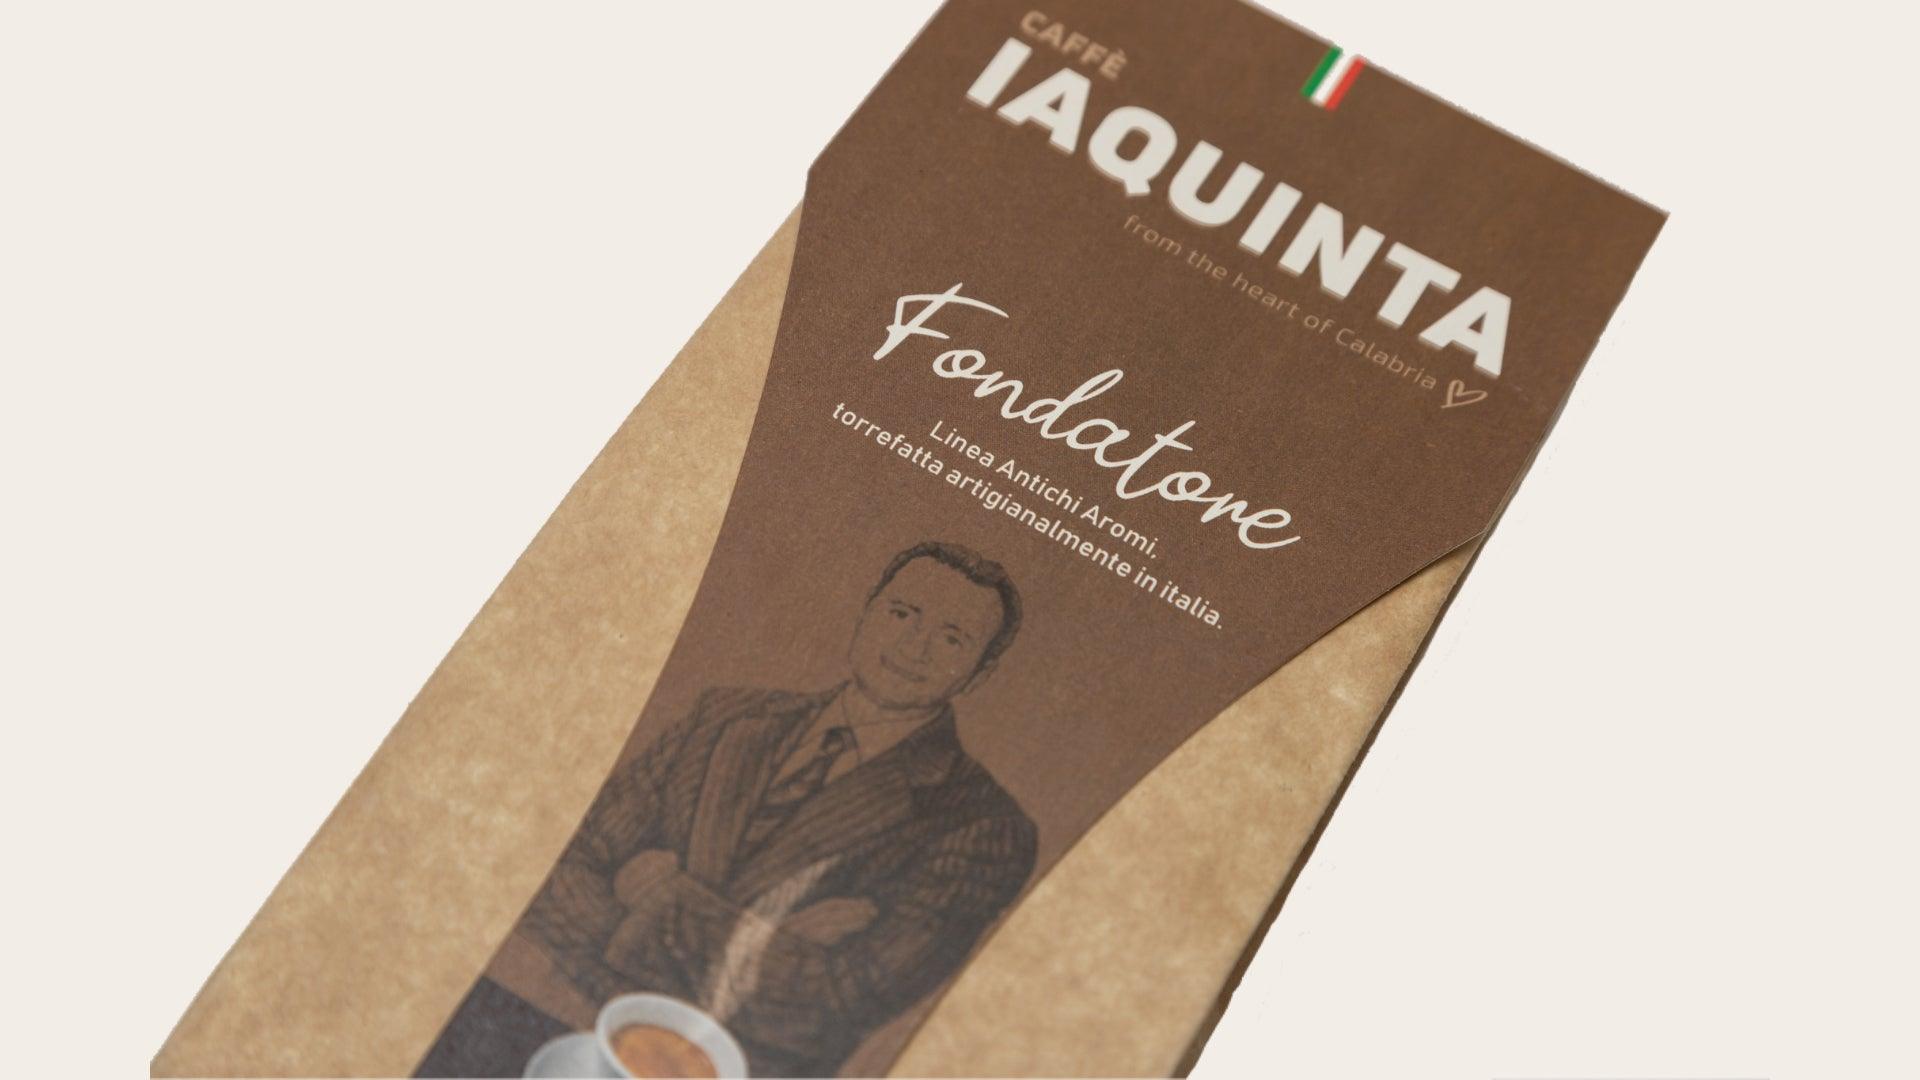 IMG_1061 - Caffè Iaquinta